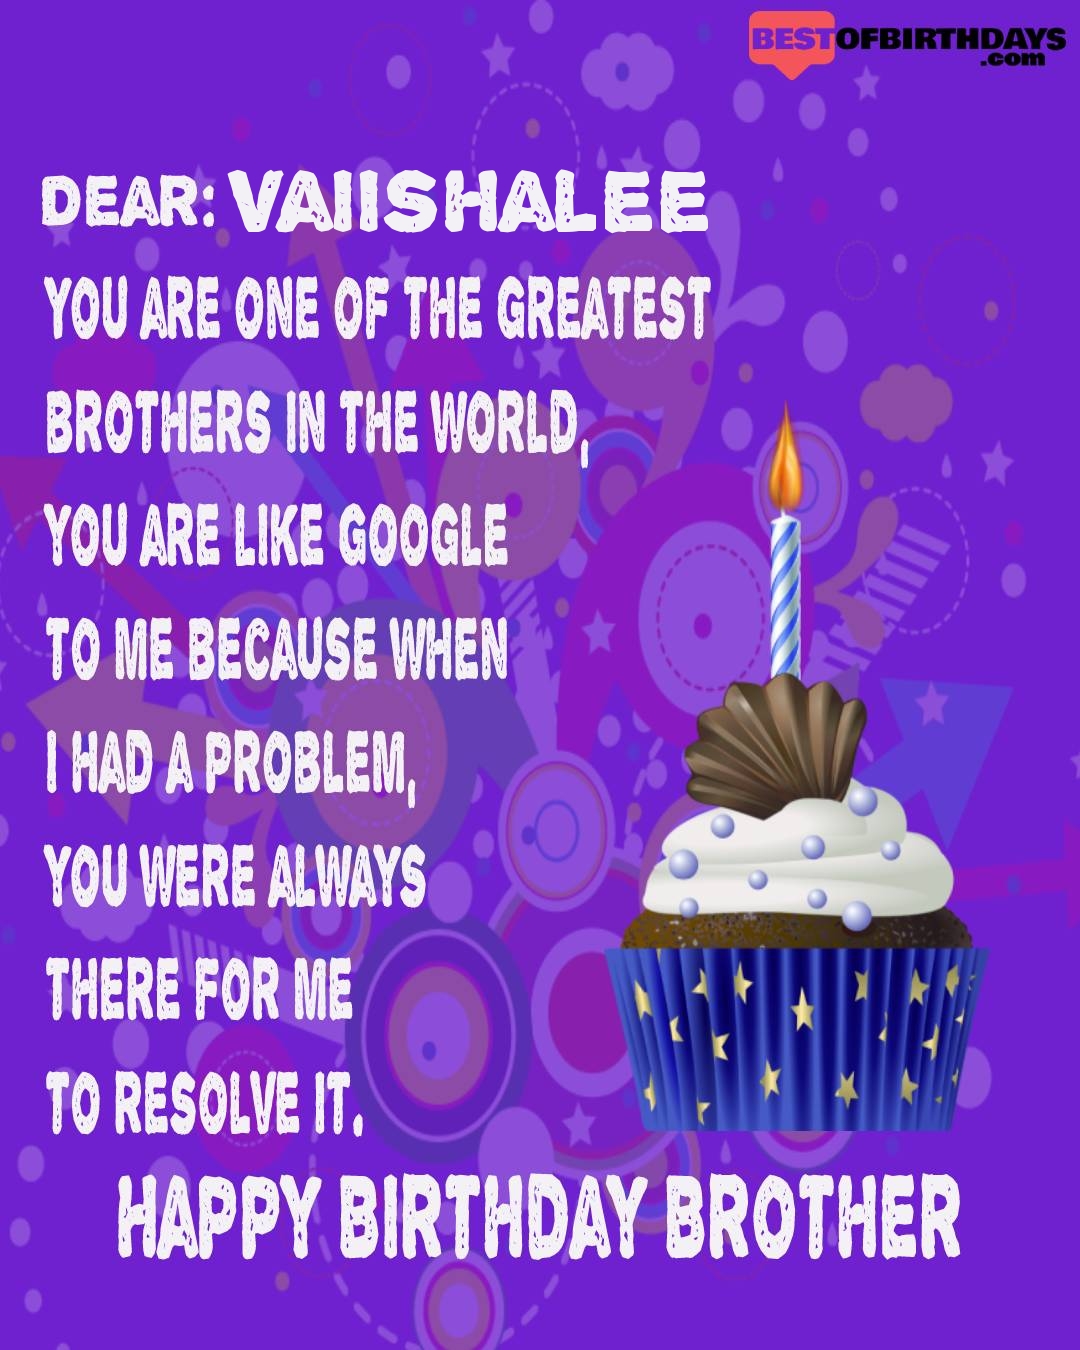 Happy birthday vaiishalee bhai brother bro